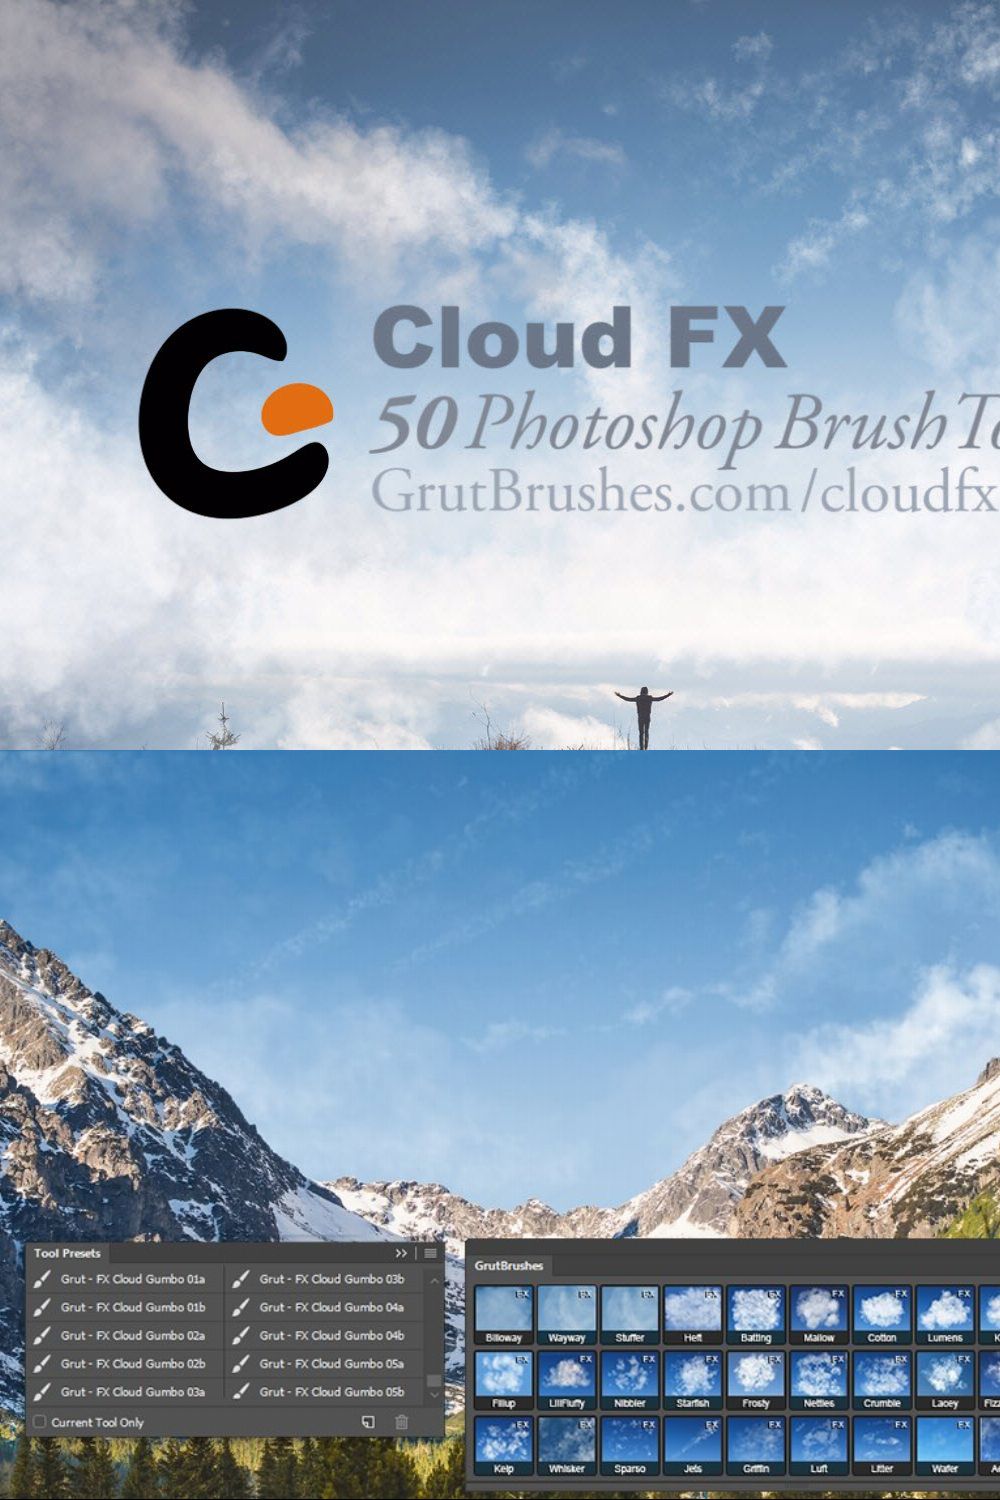 Cloud FX • 50 Photoshop Brush Tools pinterest preview image.